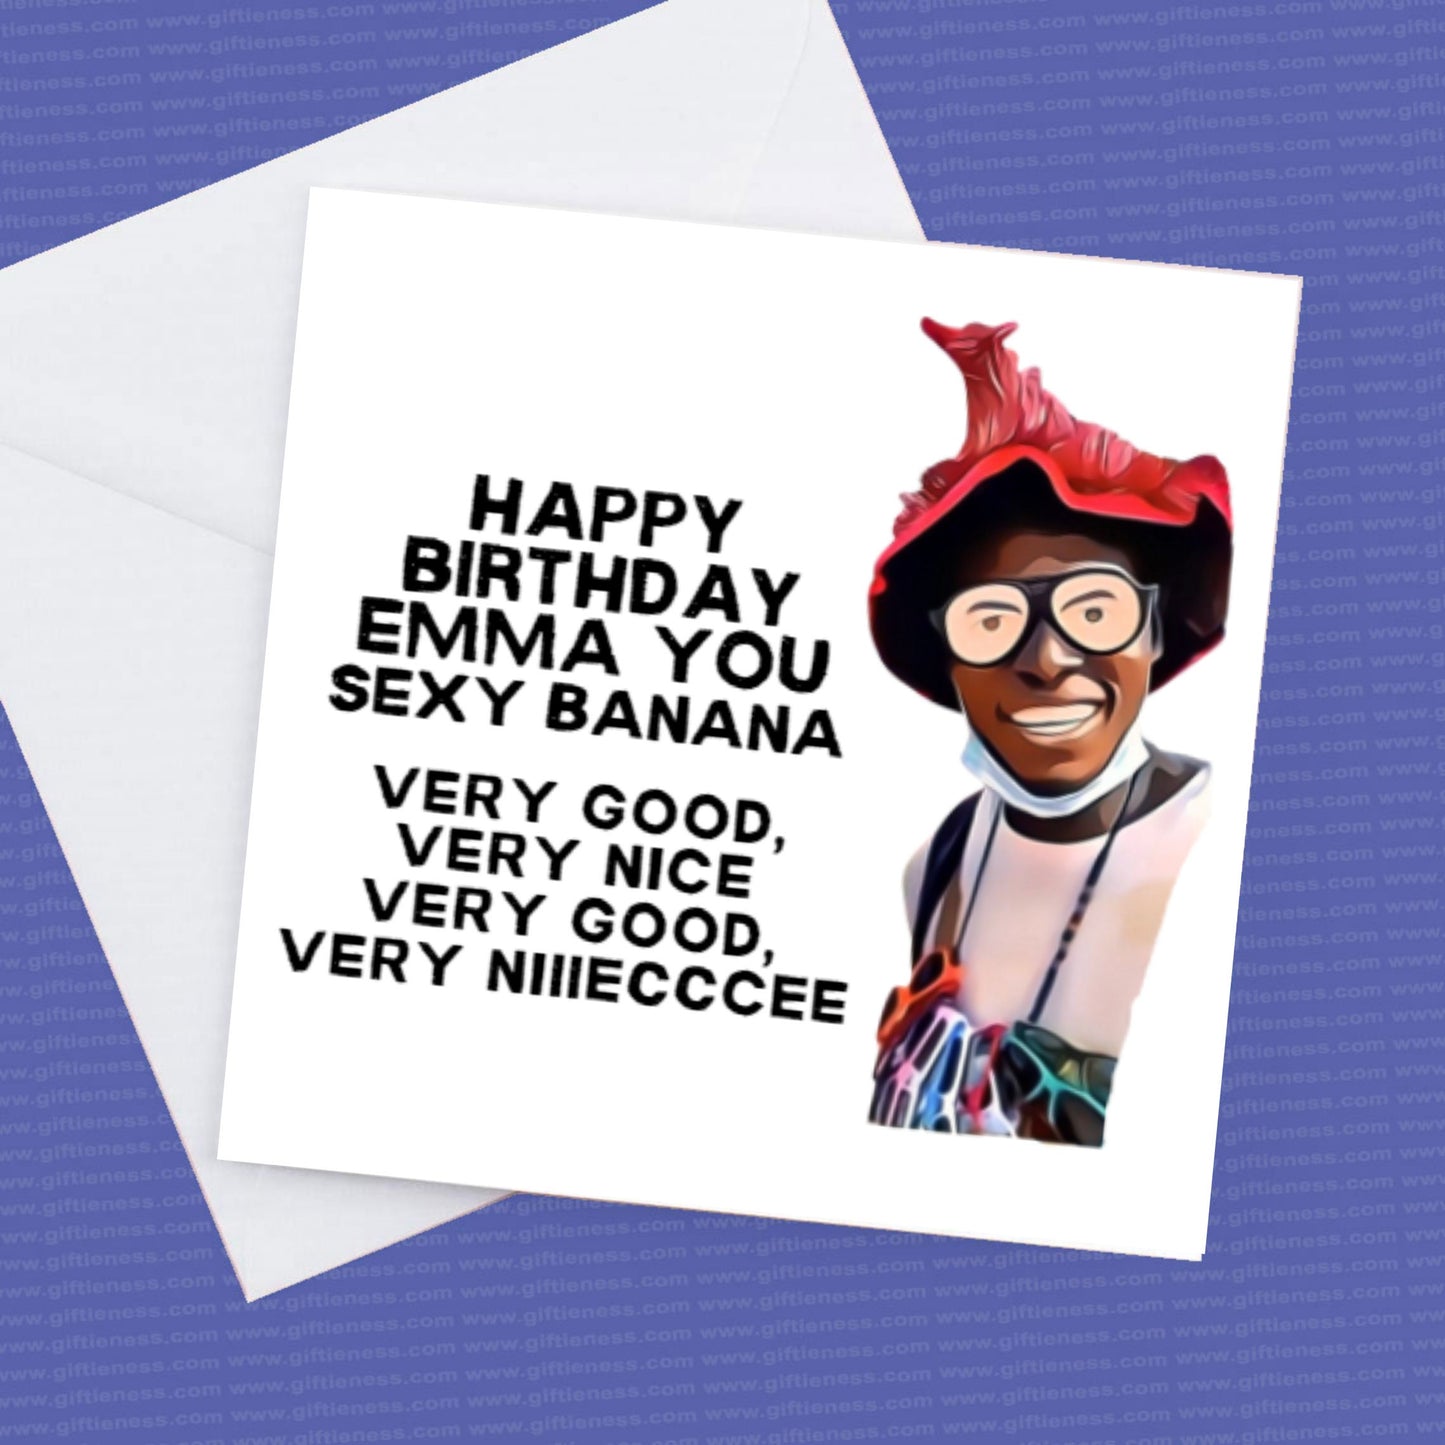 Personalised Chicken nugget man Tik Tok Famous card - Happy Birthday Sexy Banana, Very Good Very Nice